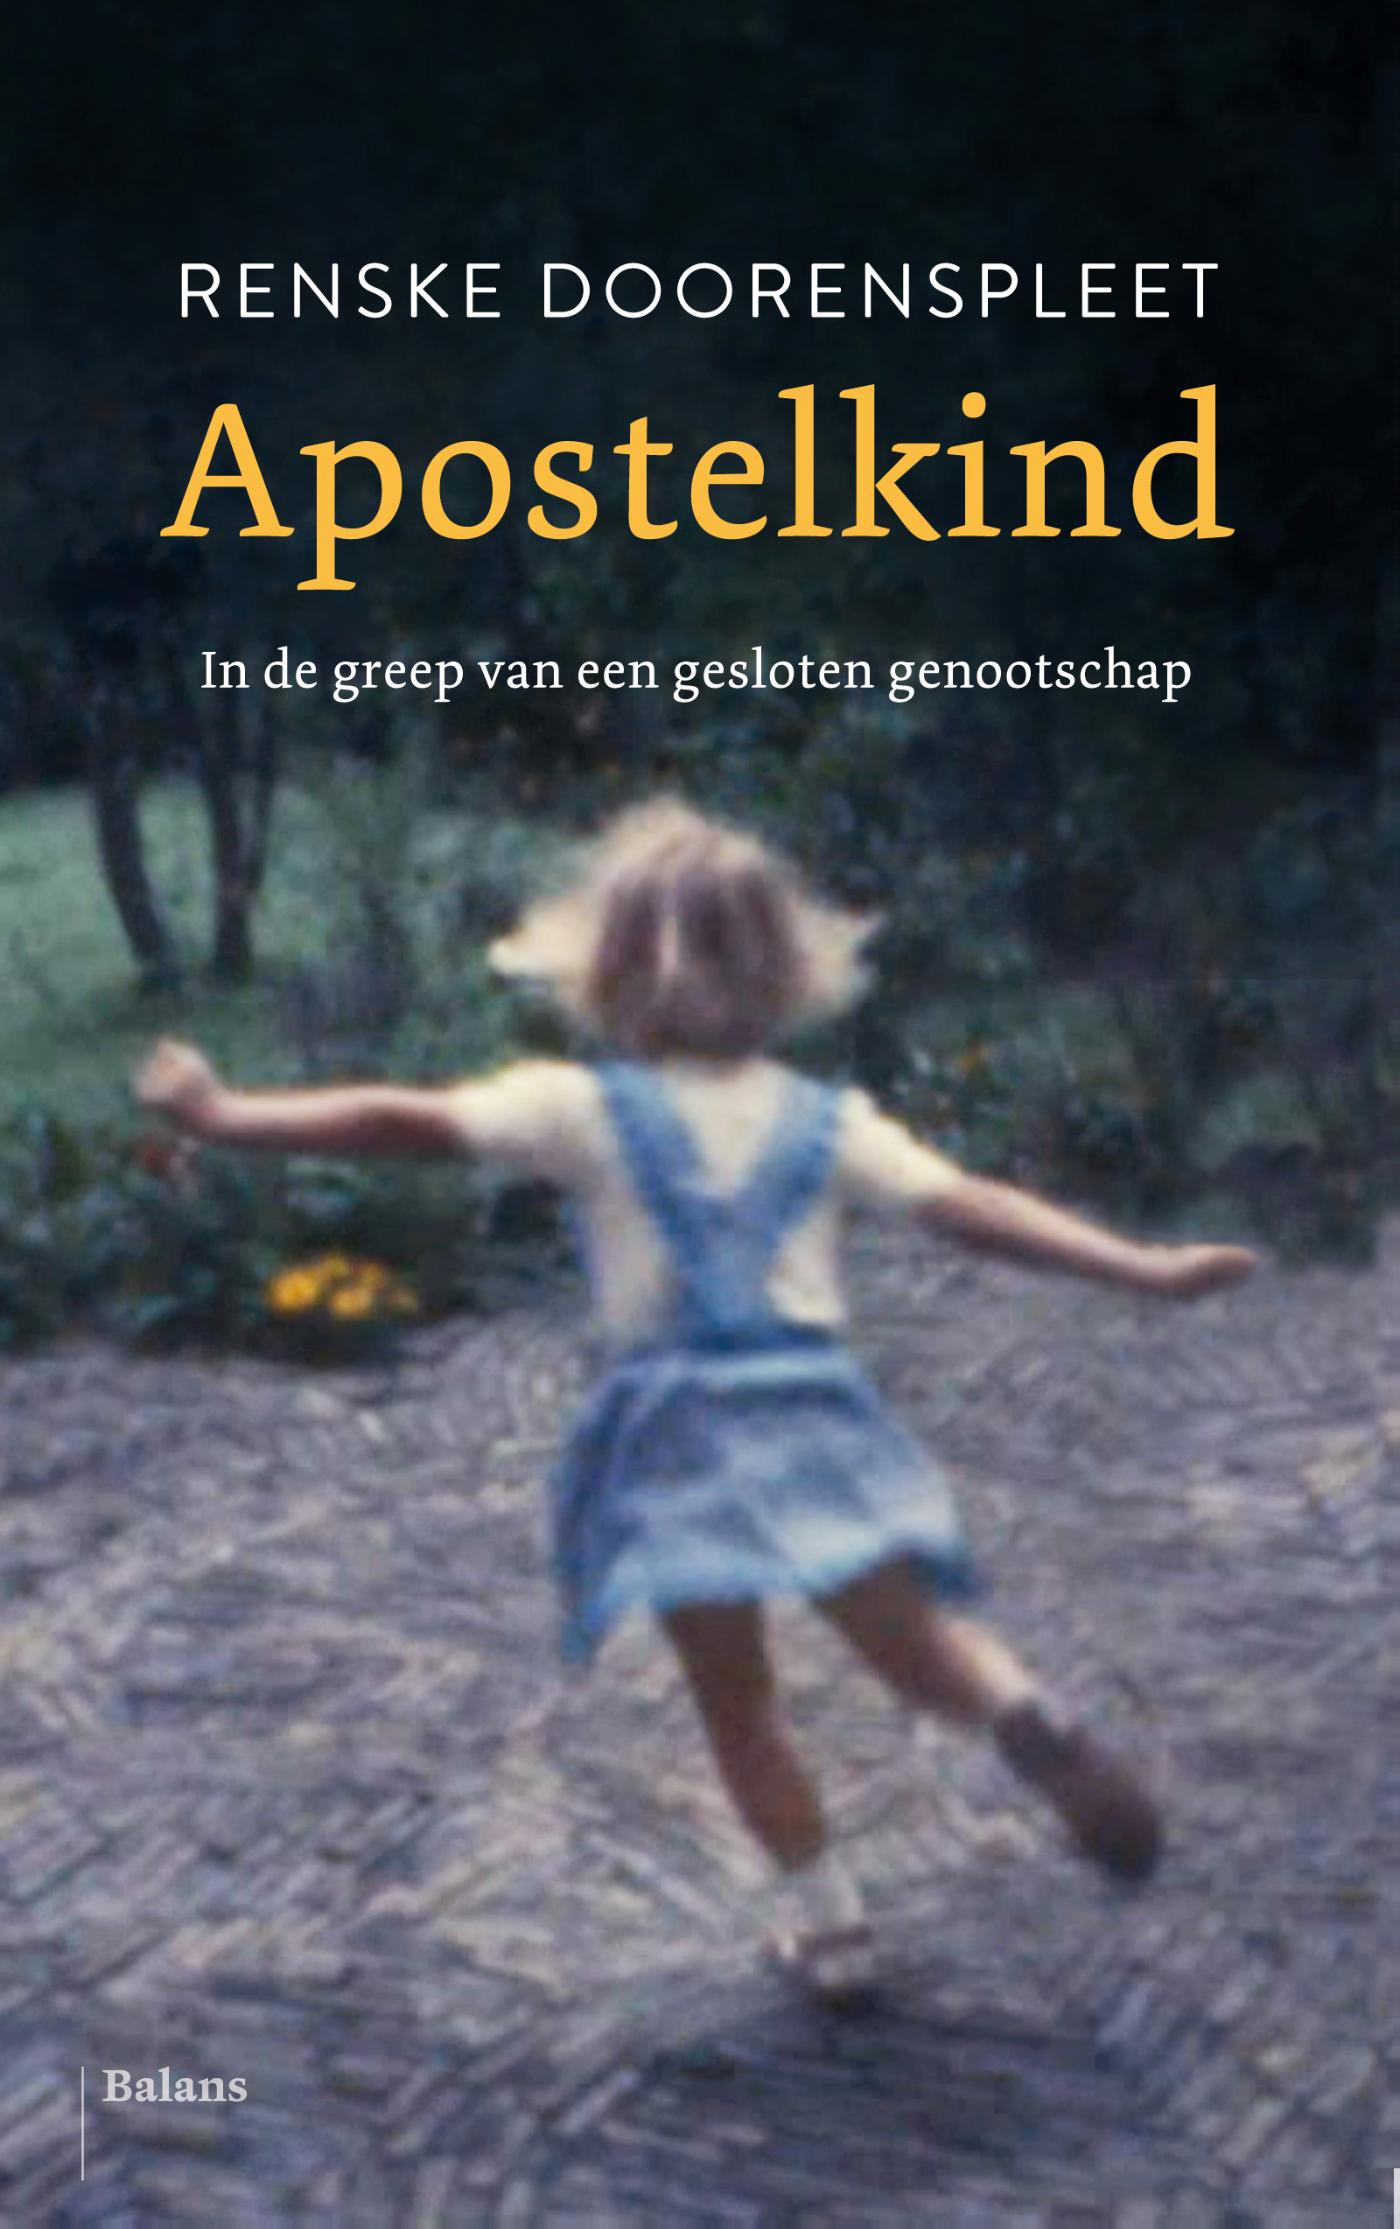 Apostelkind (Ebook)